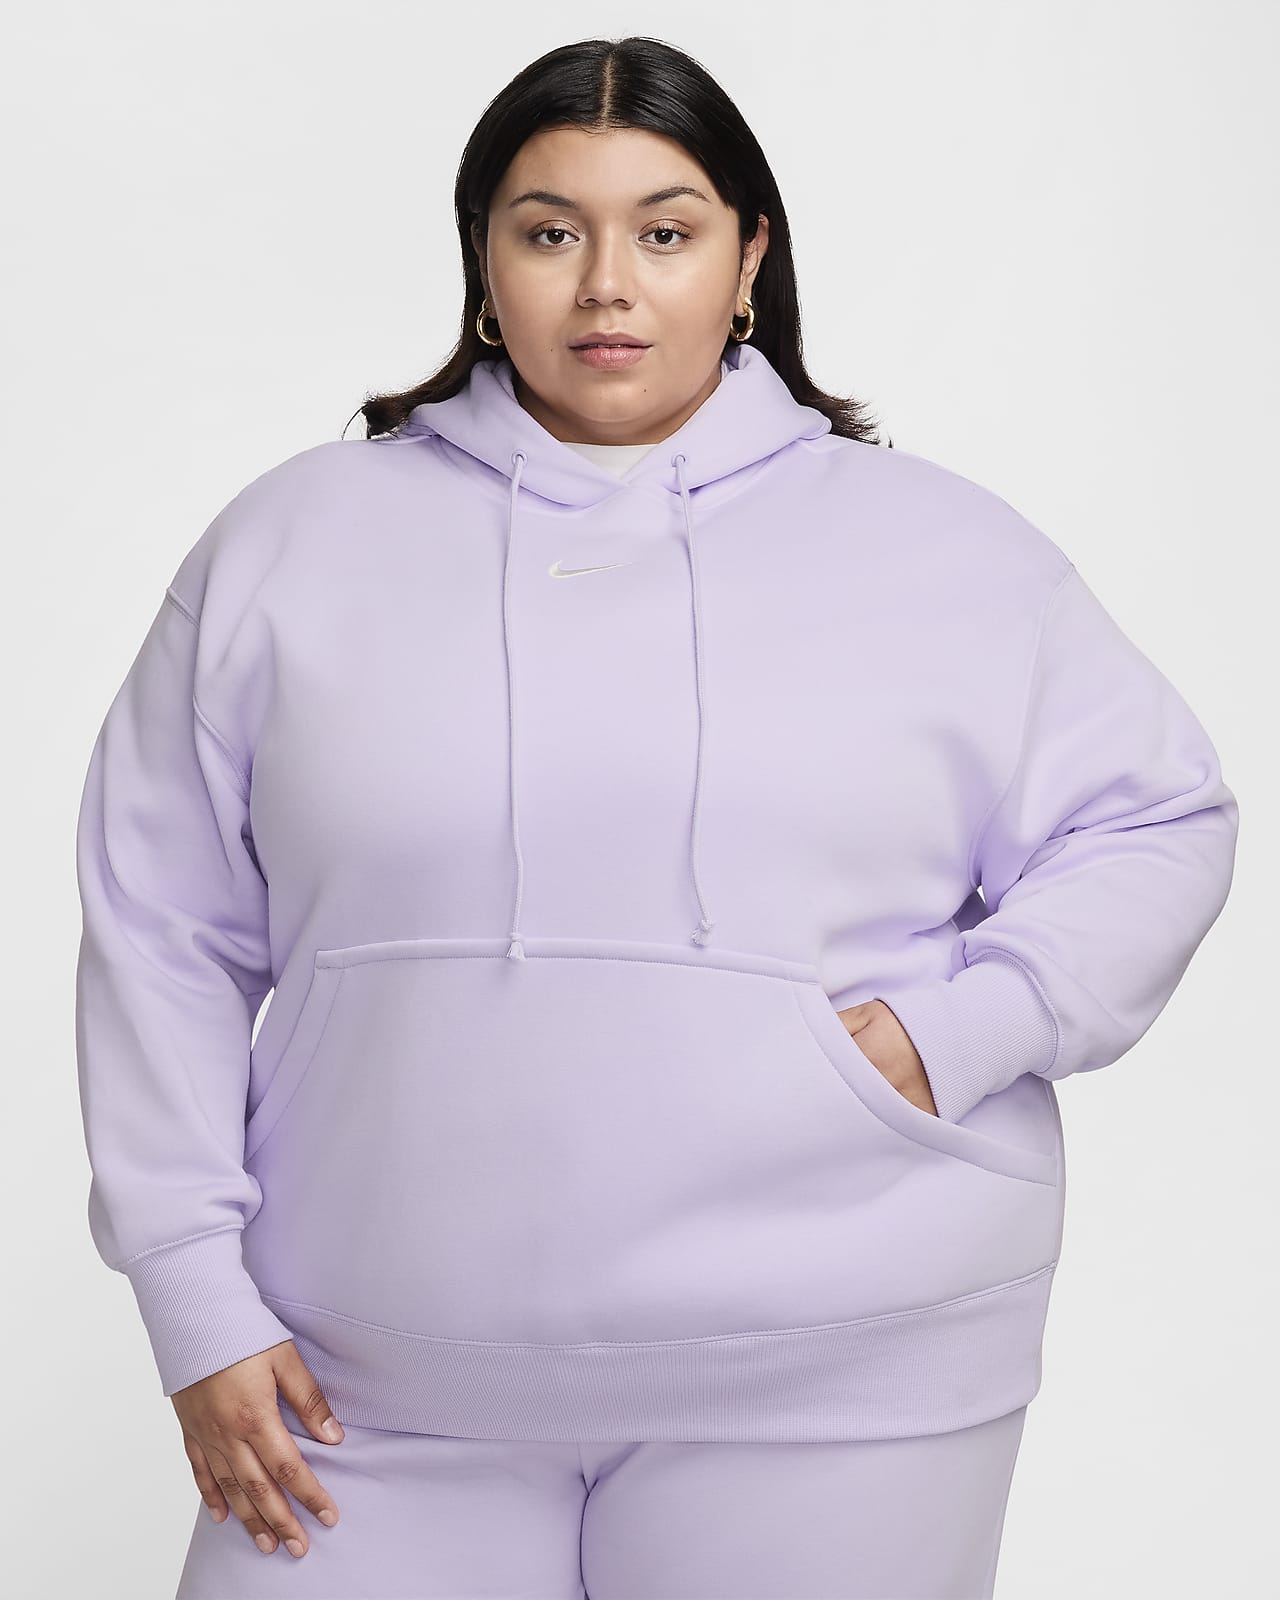 Sudadera con gorro sin cierre oversized de tejido Fleece para mujer Nike Sportswear Phoenix (talla grande)